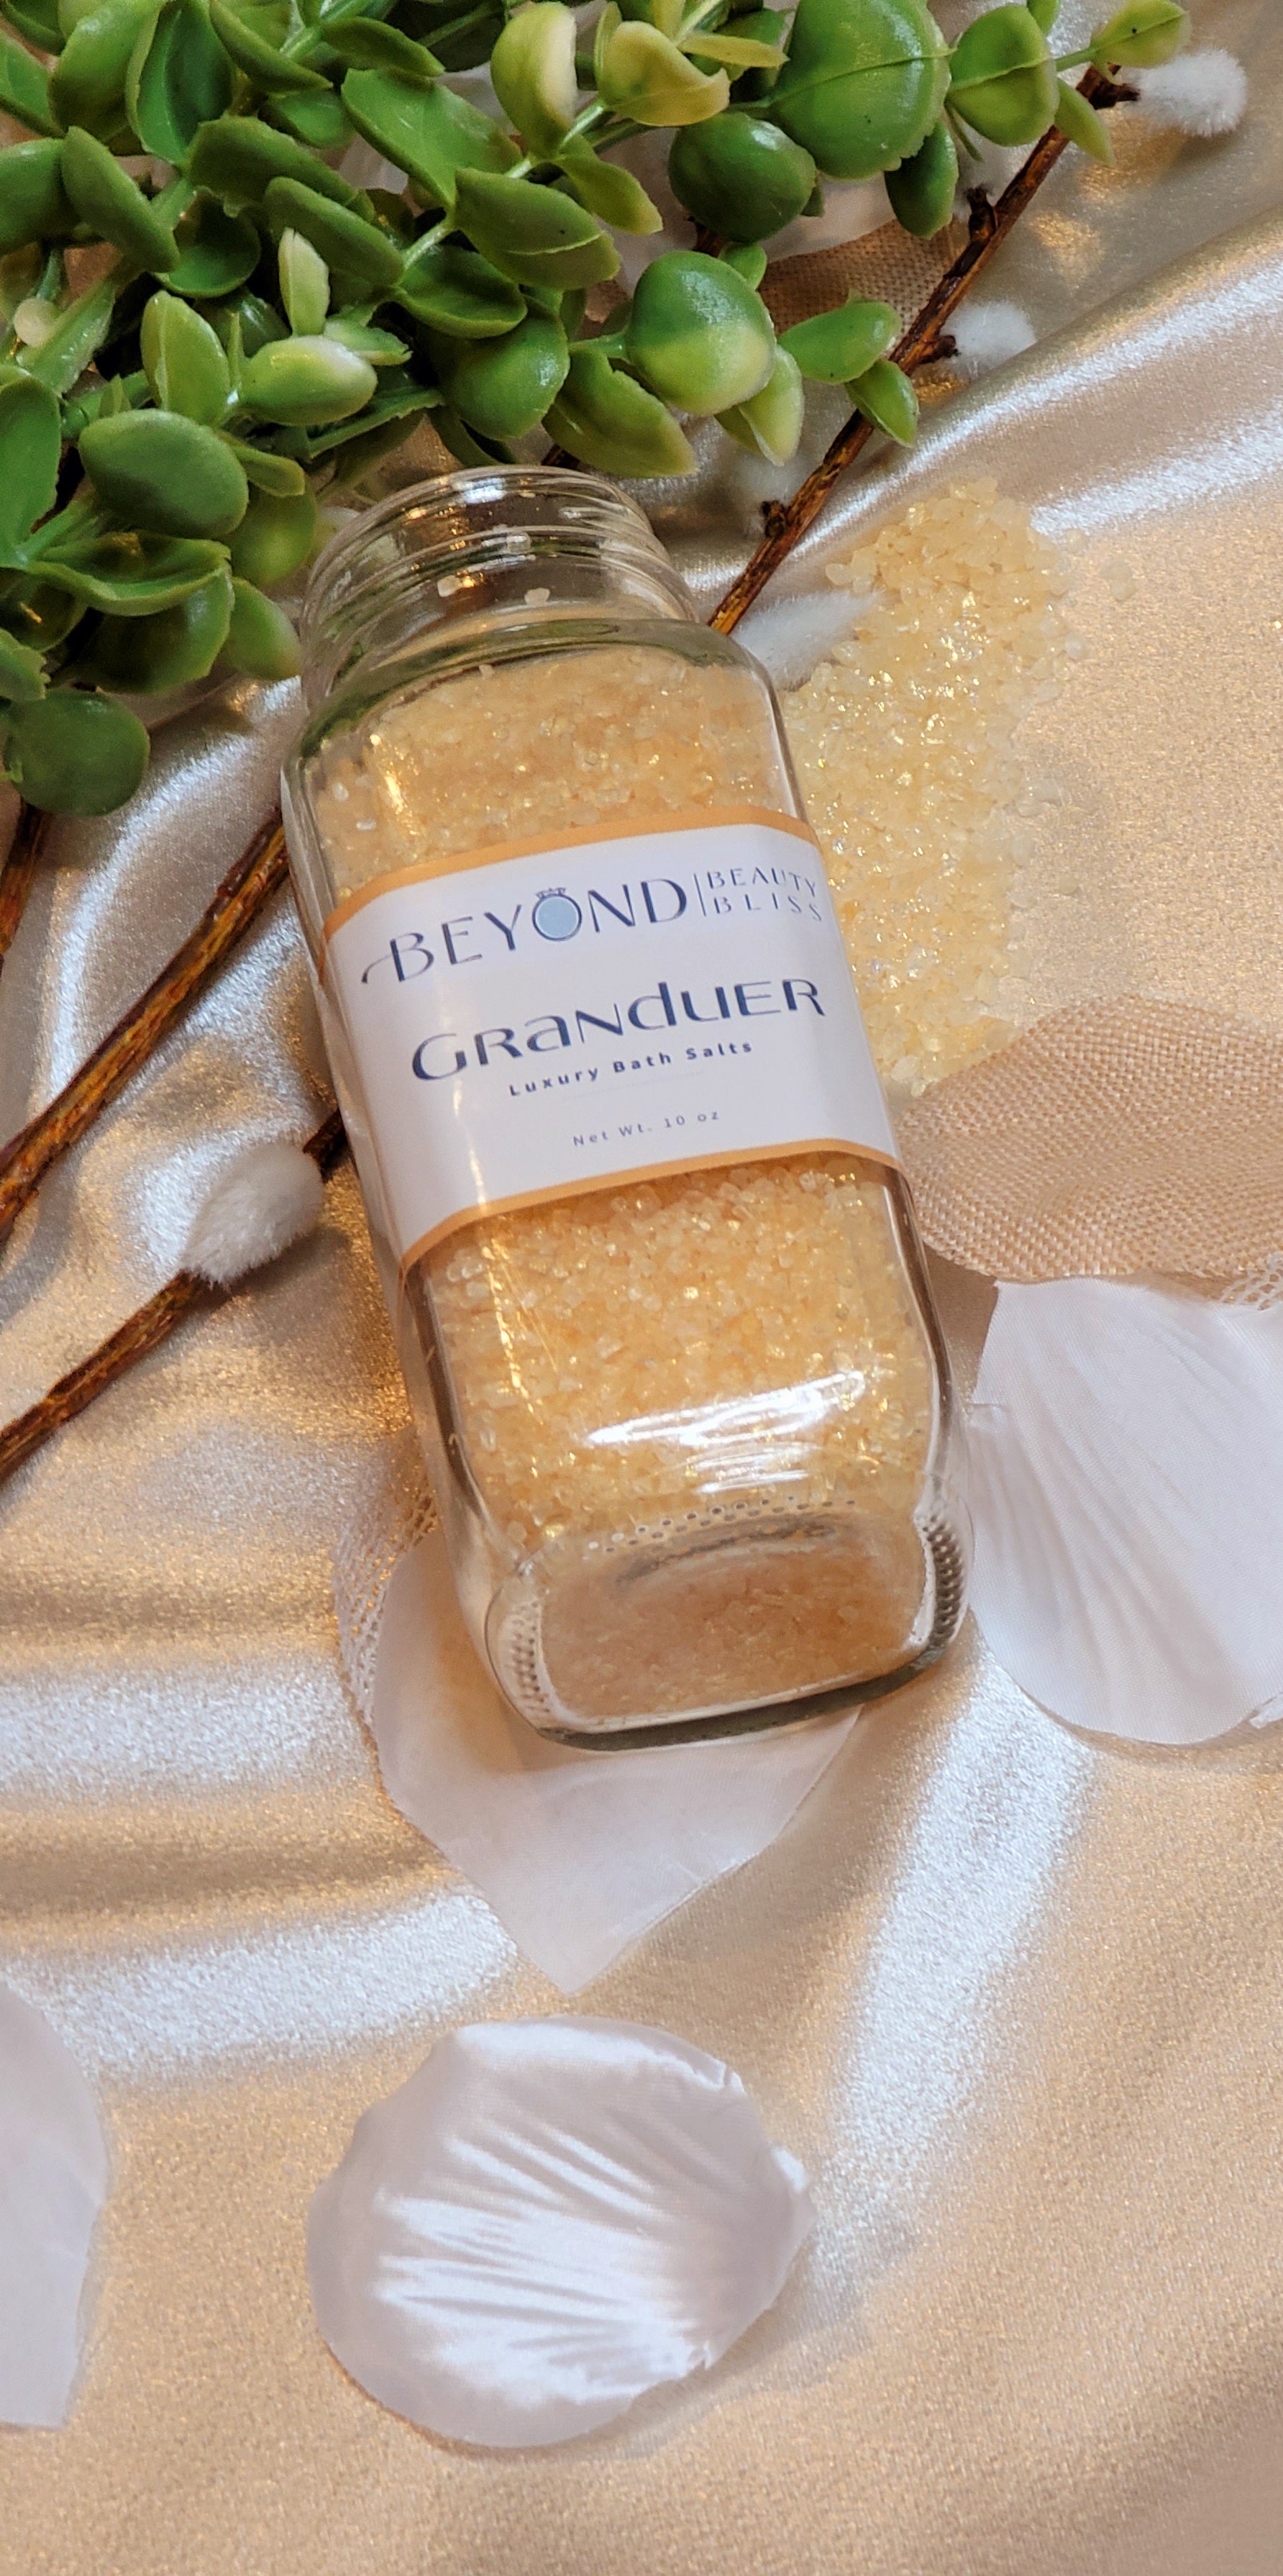 Granduer Luxury Bath Salts